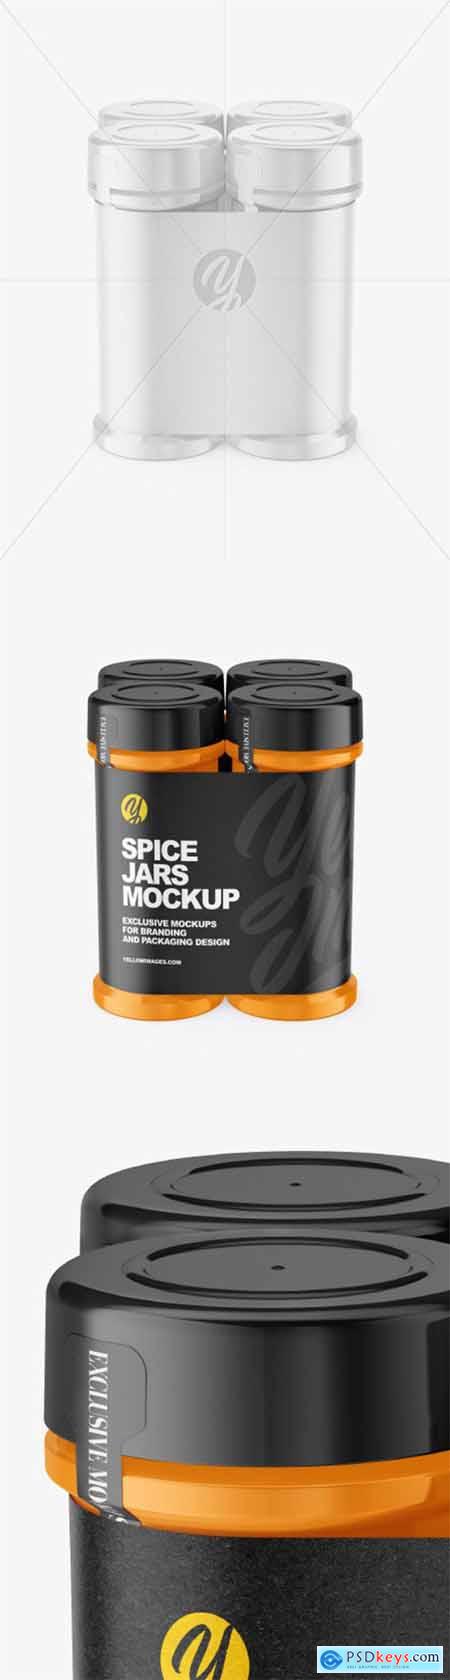 Four Glossy Spice Jars Mockup 80611